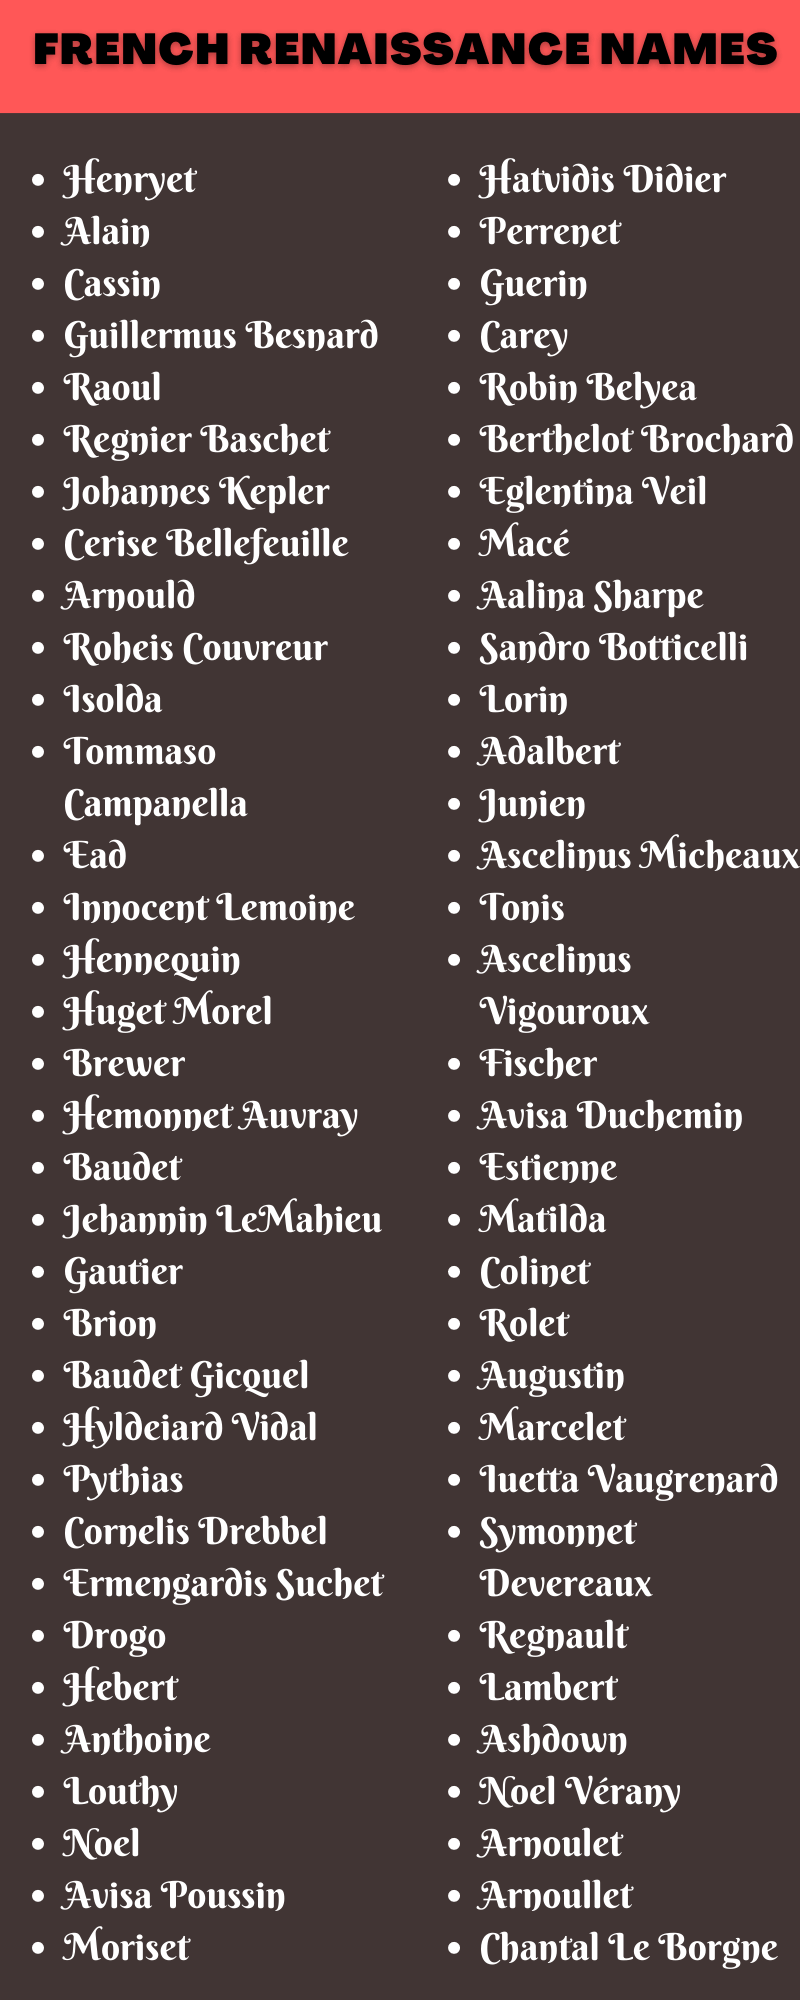 French Renaissance Names